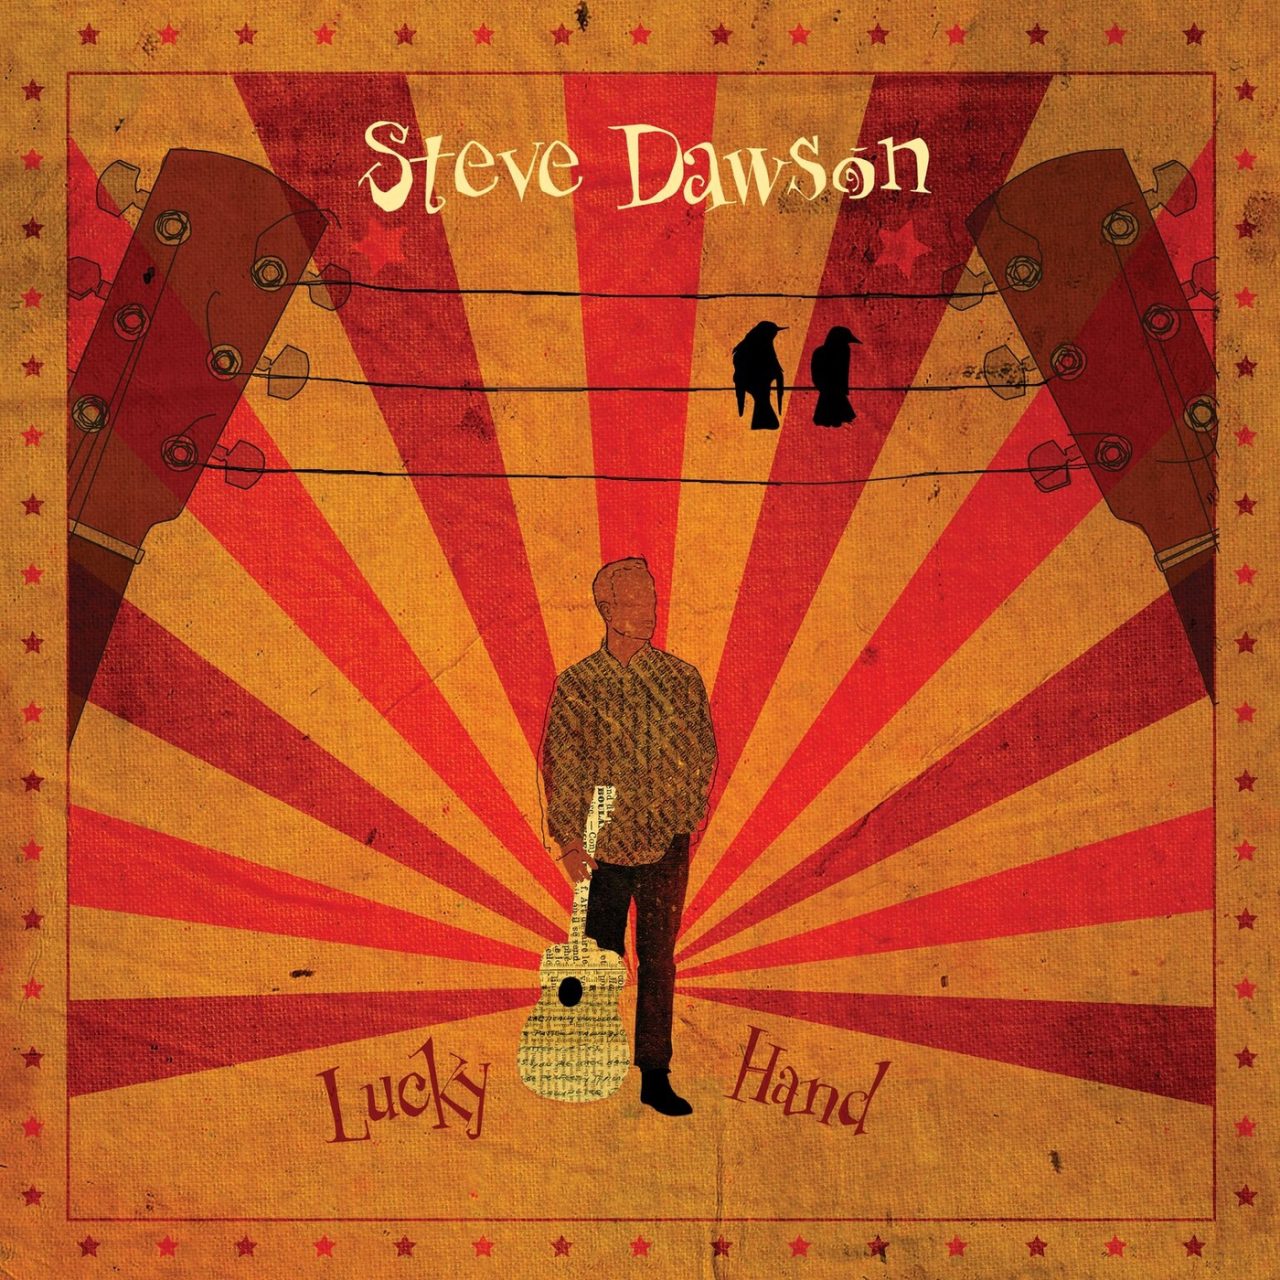 Steve Dawson - Lucky Hand cover album